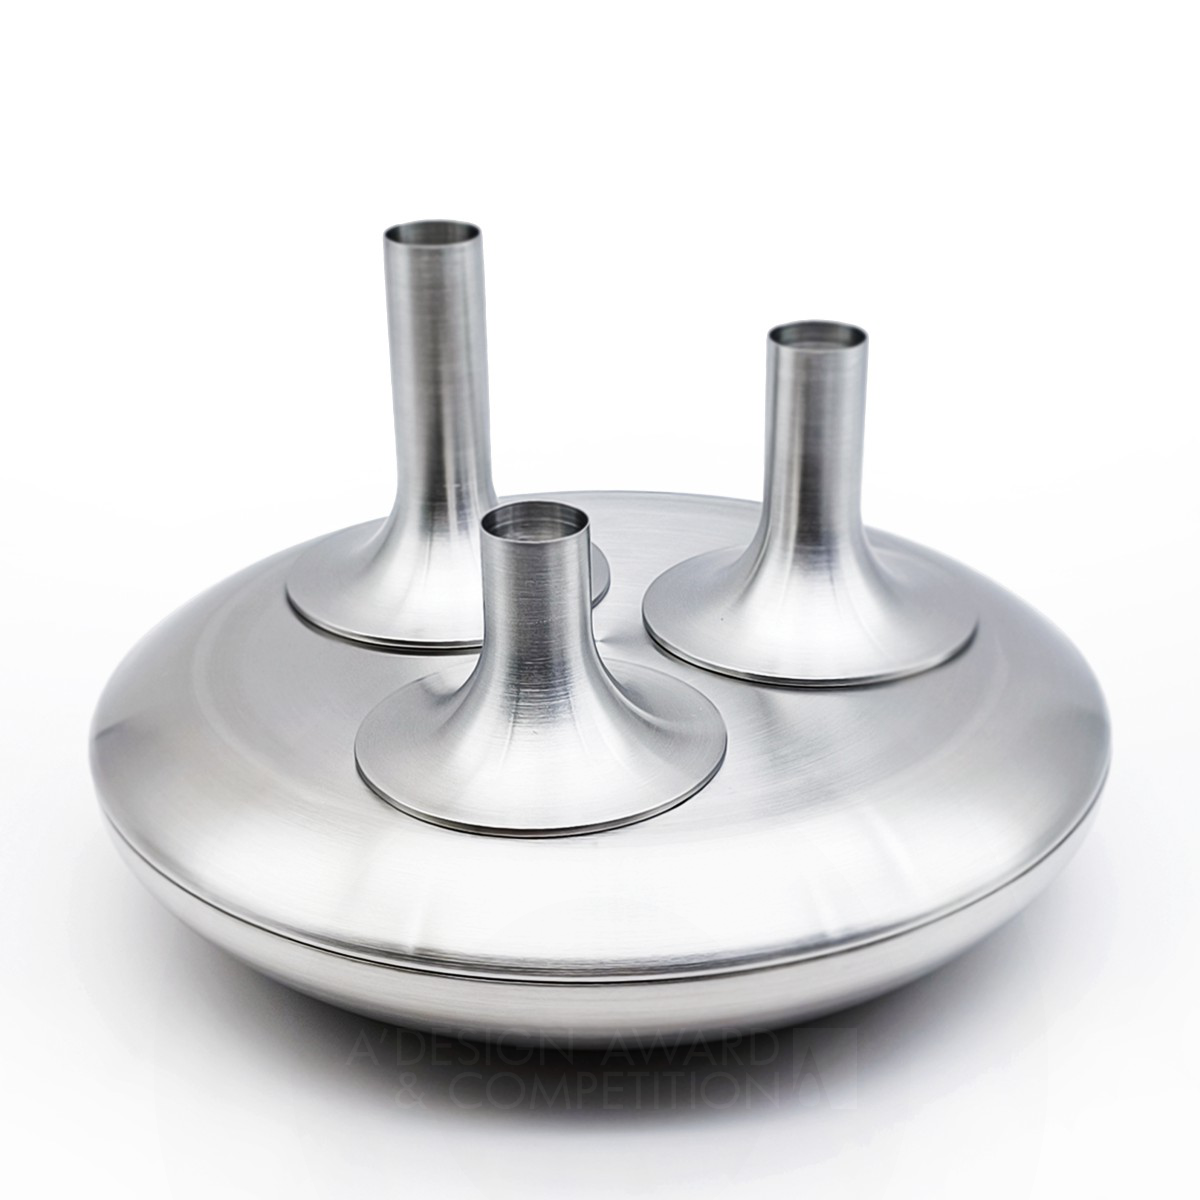 Utospace <b>Stainless Steel Candleholder Set